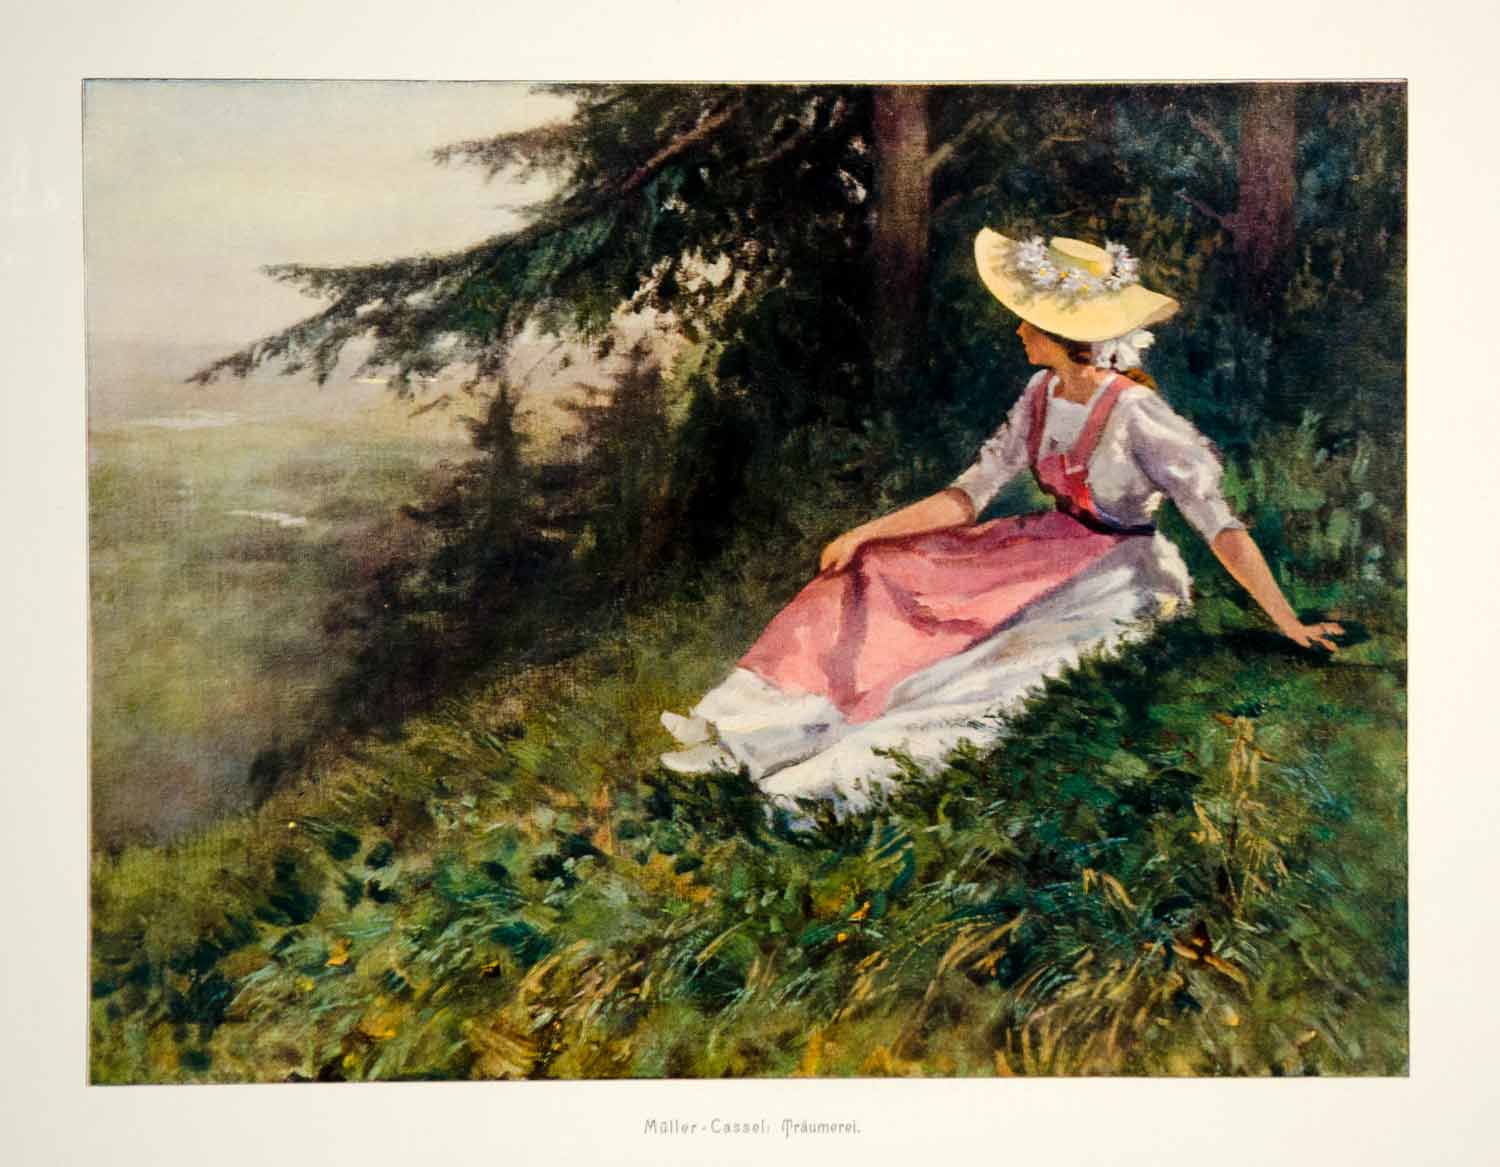 1912 Photolithograph Adolf Leonhard Muller-Cassel Art Traumerei Landscape MK4